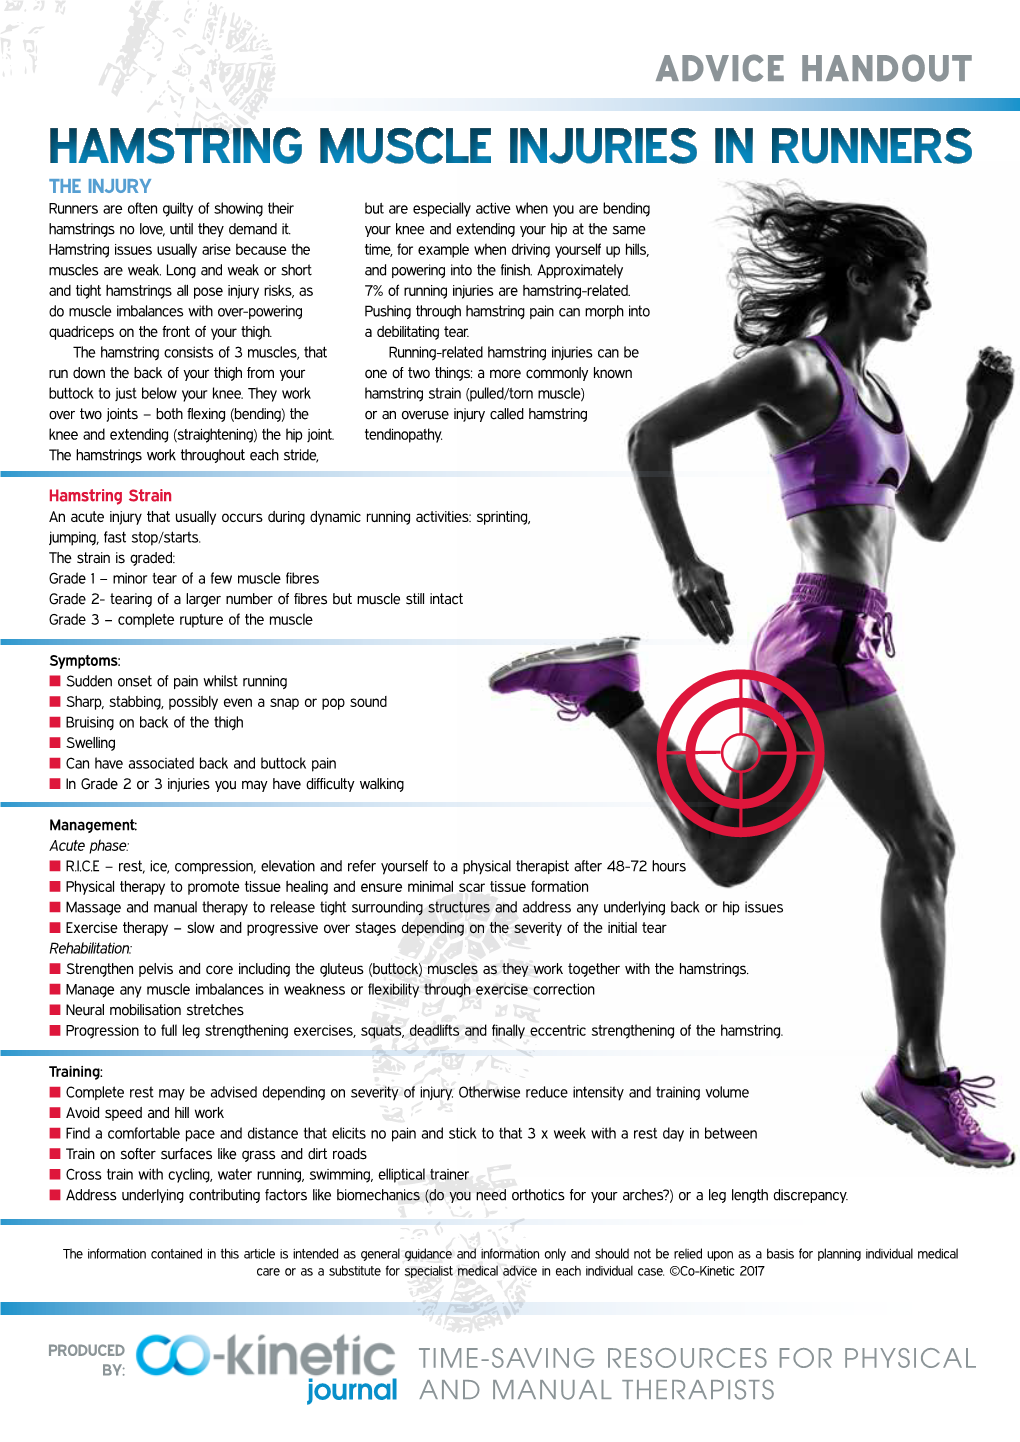 Hamstring Muscle Injuries in Runners